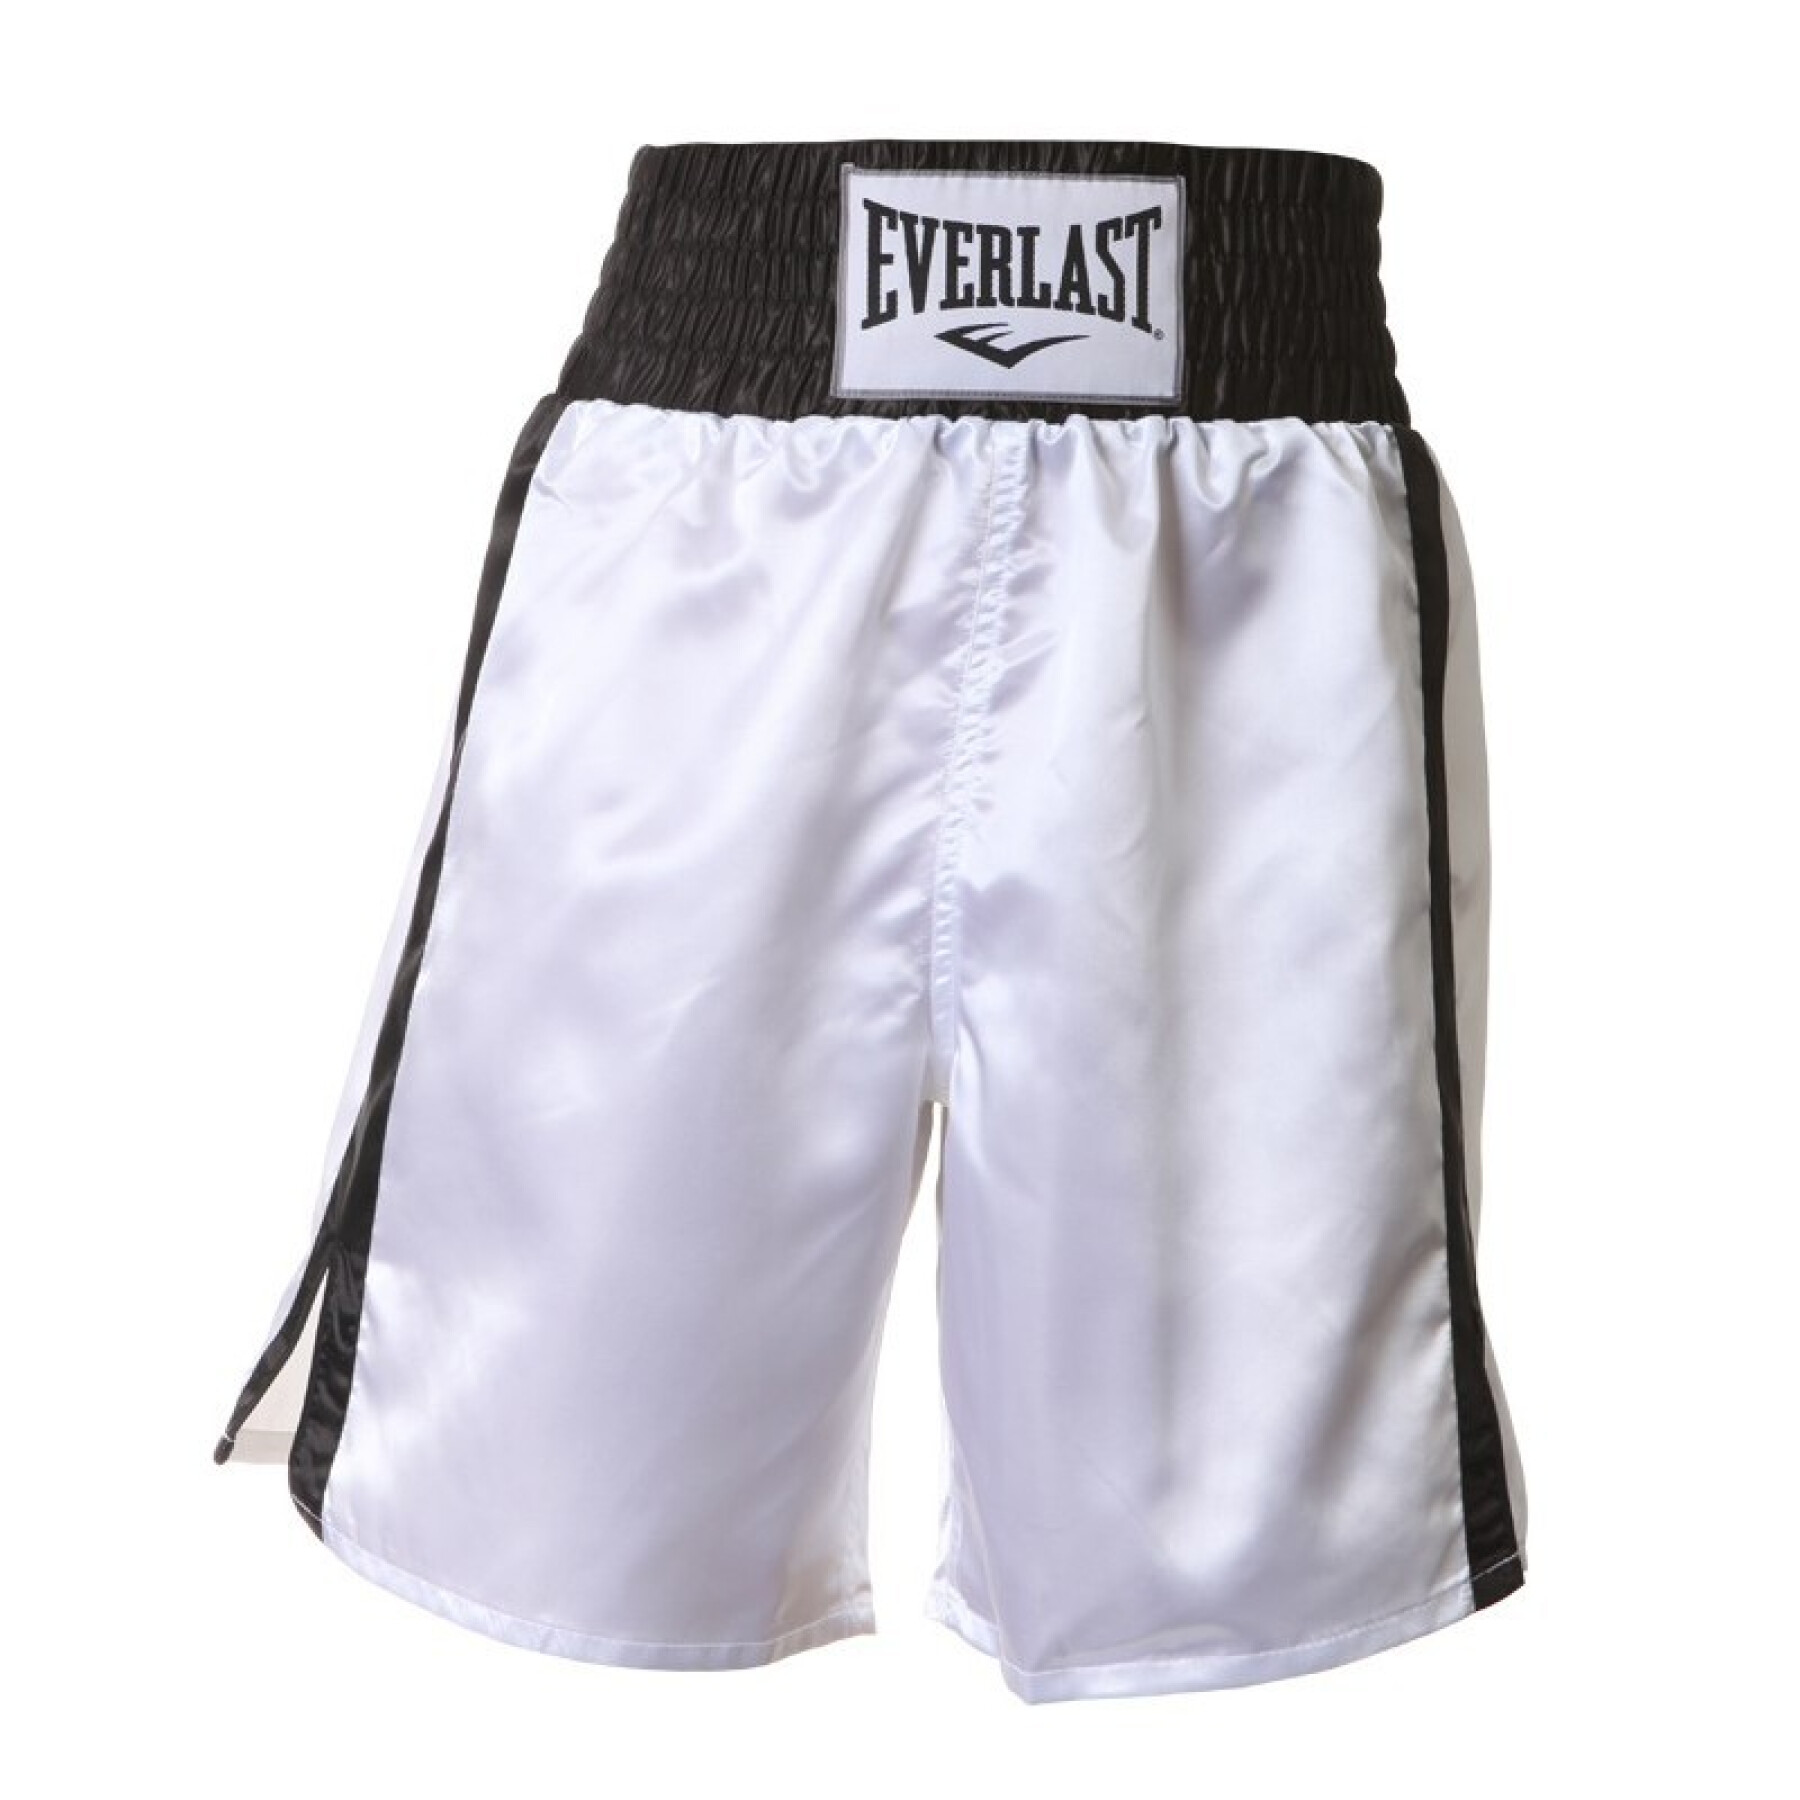 Boxing shorts Everlast Pro (61cm)